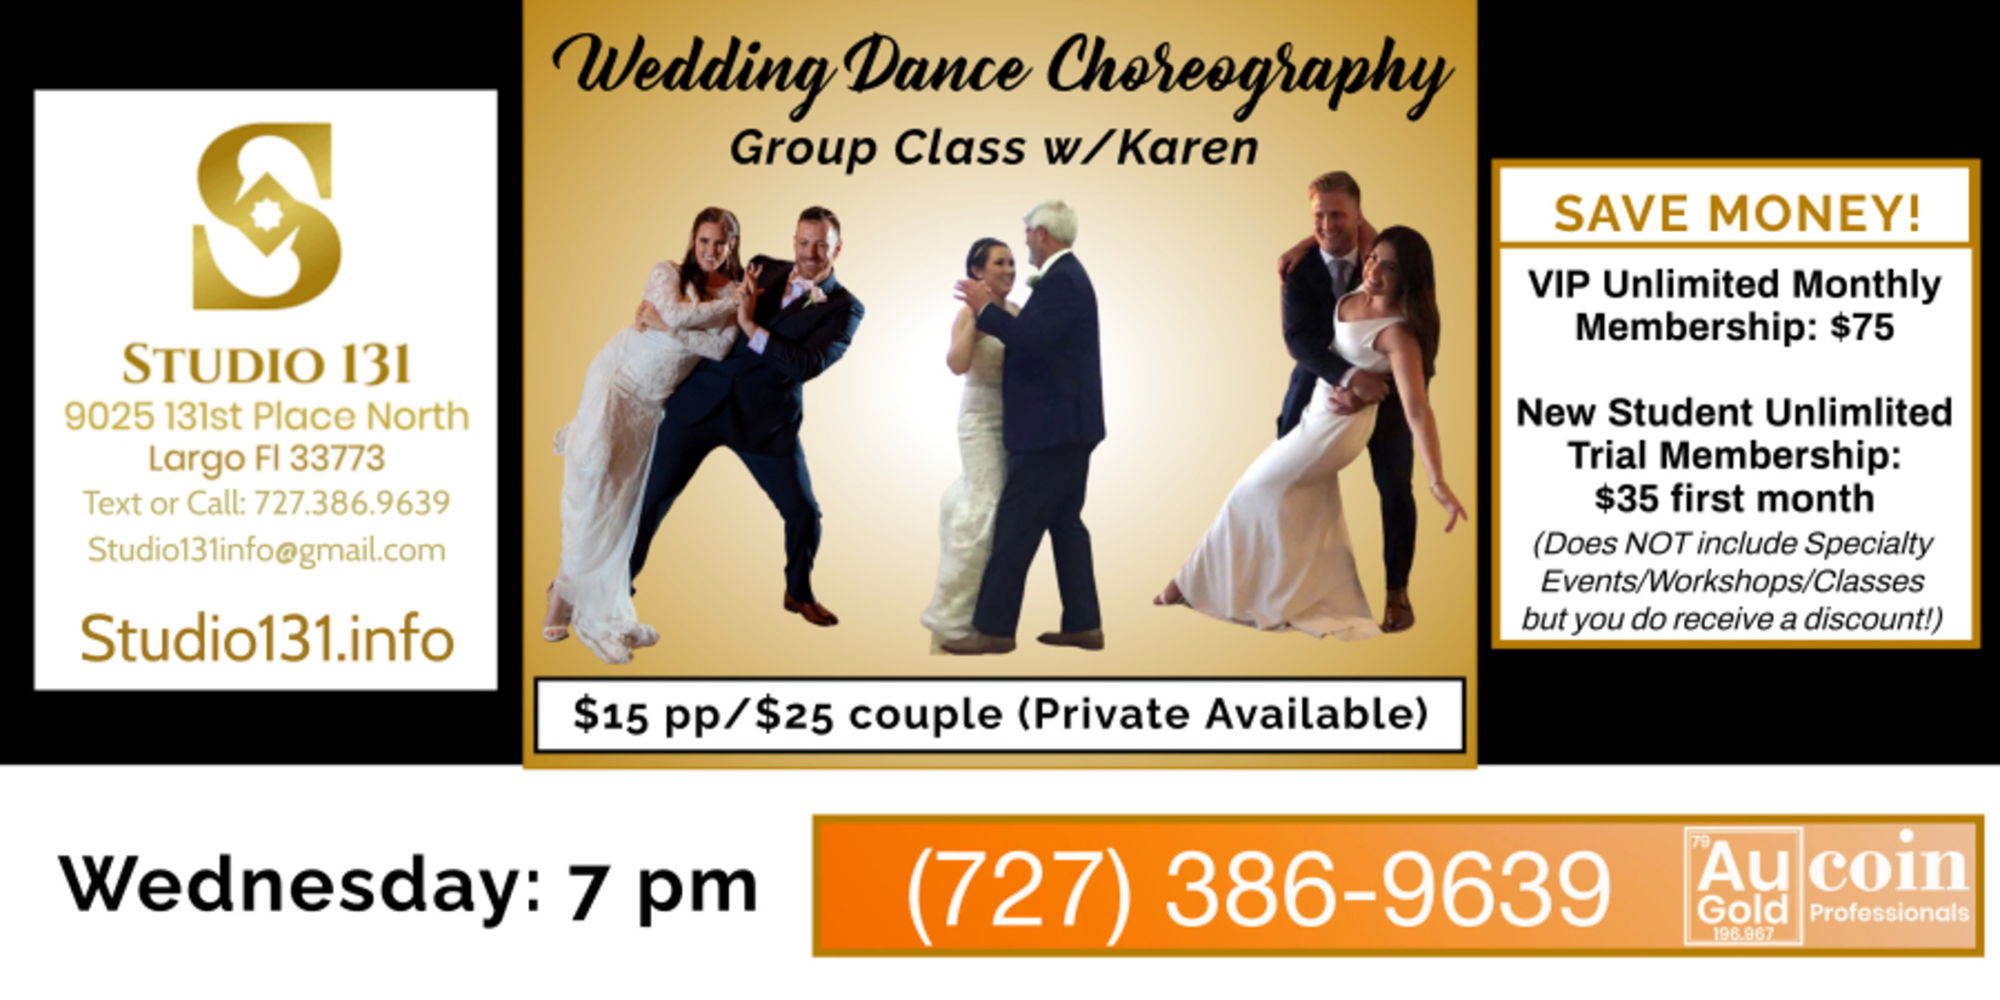 Wedding Dance Choreography with Miss Karen promotional image